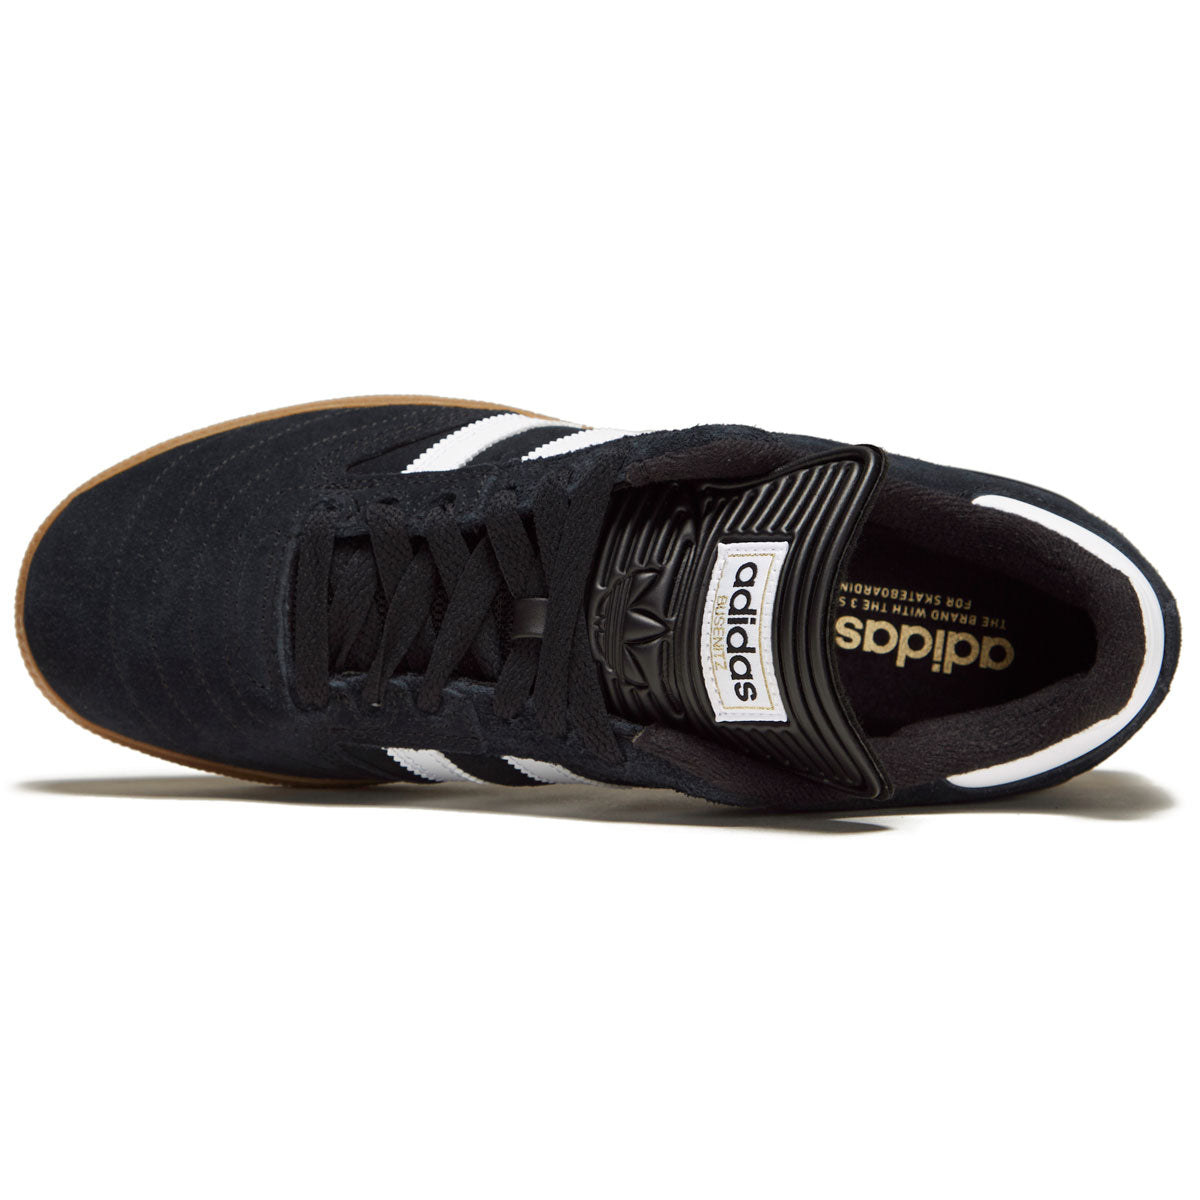 Adidas Busenitz Shoes - Black/White/Gold Metallic image 3